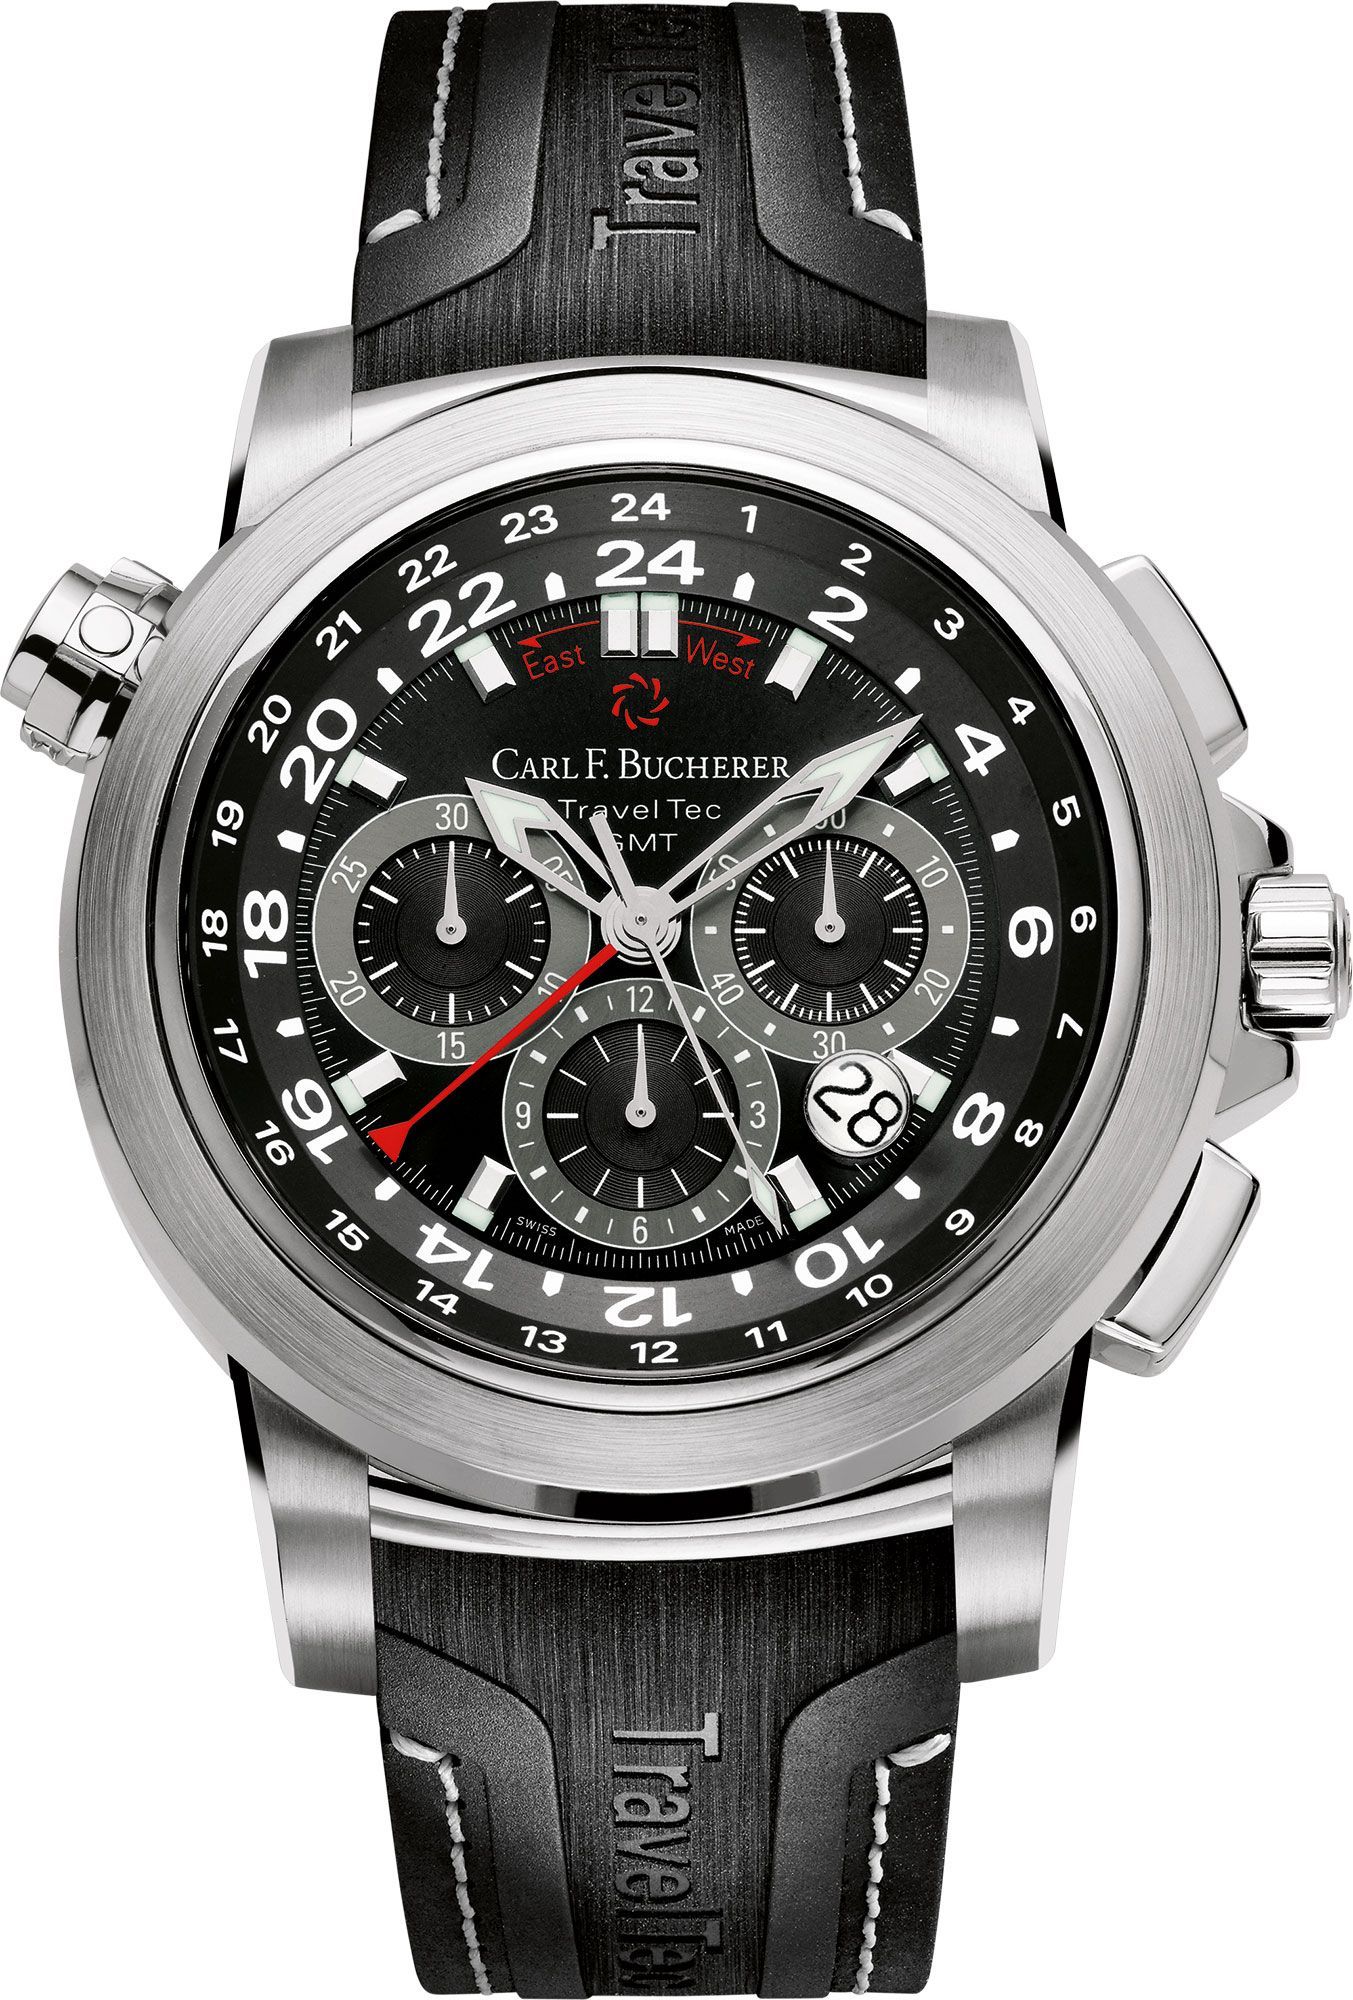 Carl F. Bucherer TravelTec 46.6 mm Watch in Black Dial For Men - 1